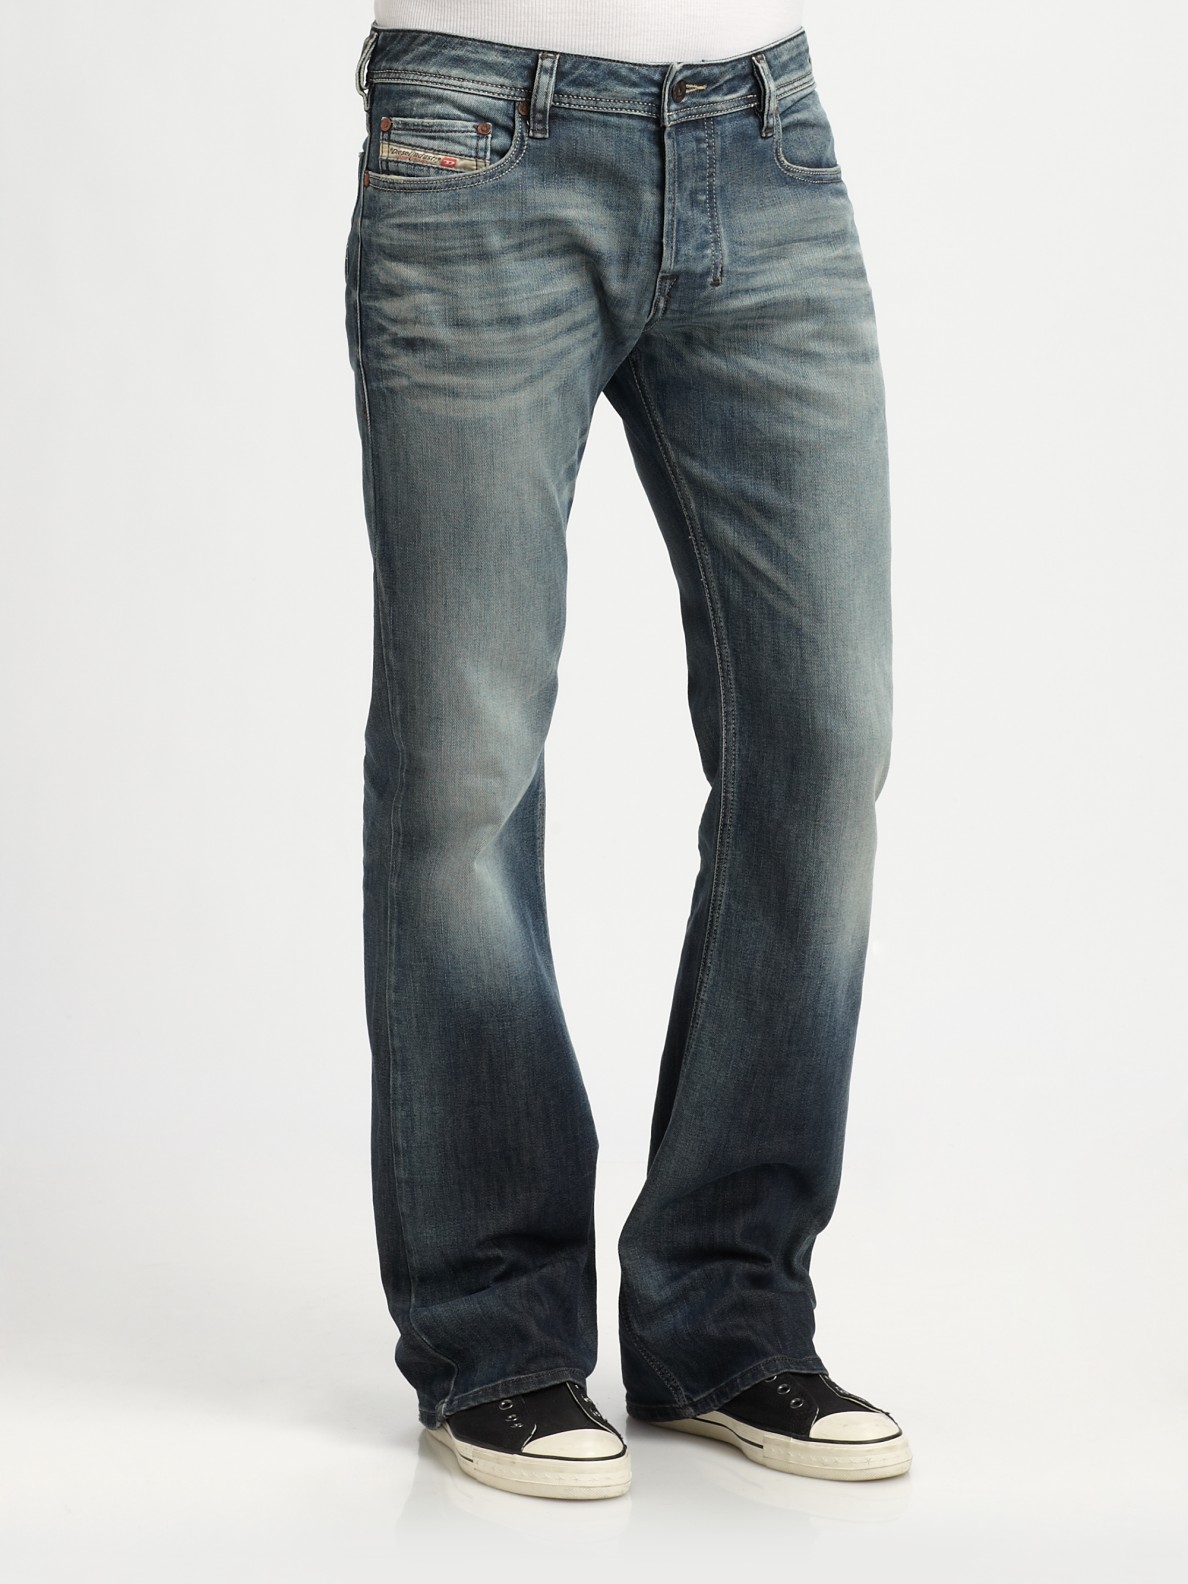 zathan diesel jeans, Off 65%, www.scrimaglio.com